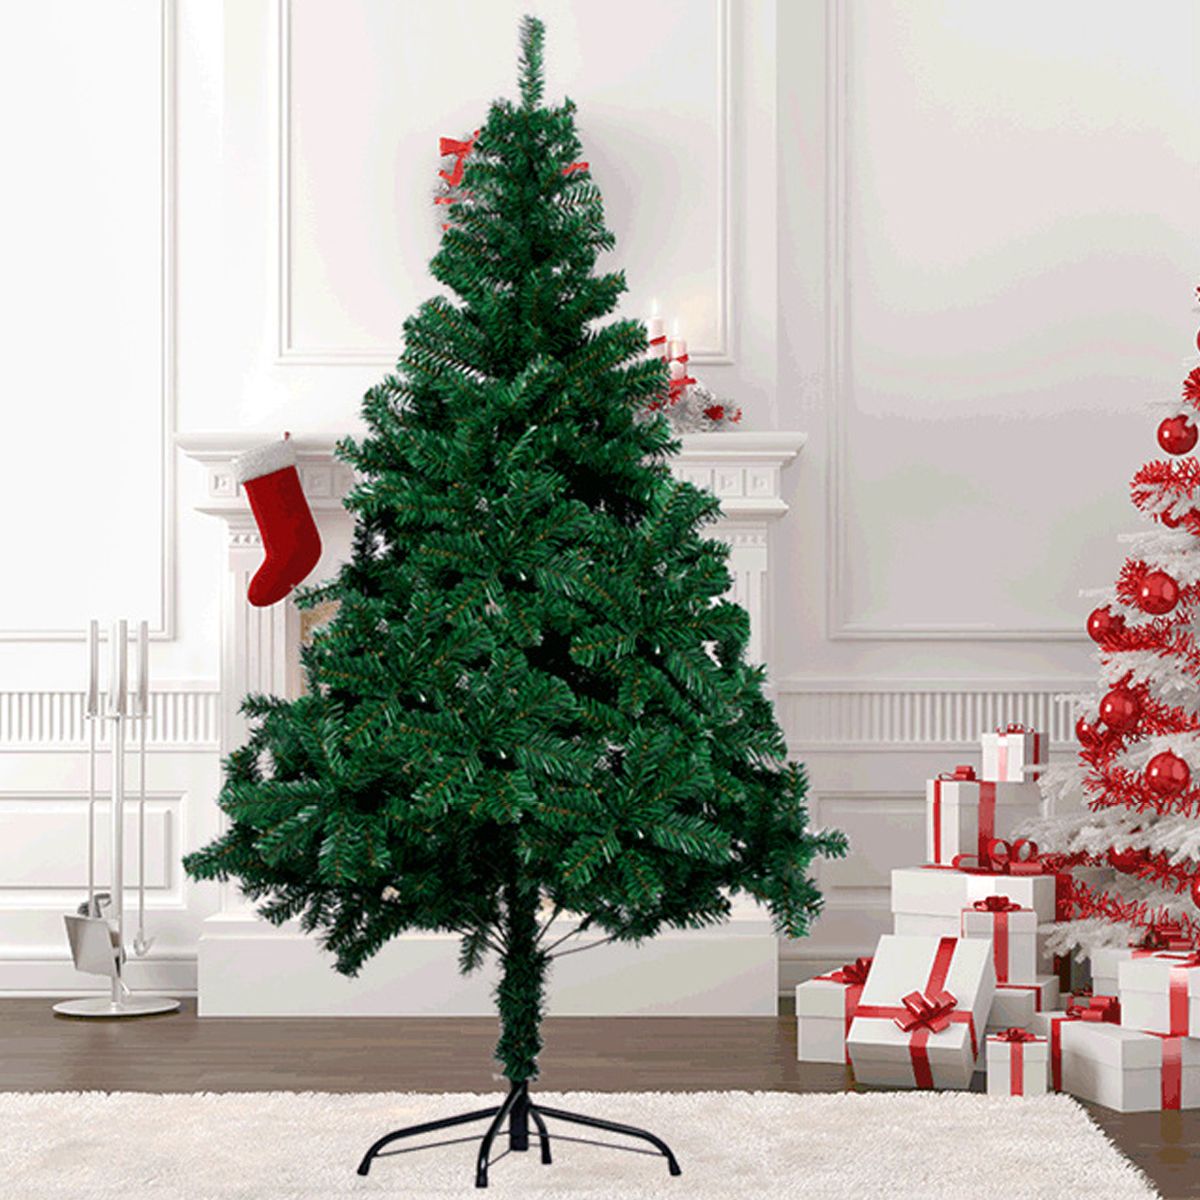 18m-Green-Christmas-Tree-570t-PVC-Leaf-Removable-Mini-Artificial-Christmas-Tree-Decorations-Christma-1588717